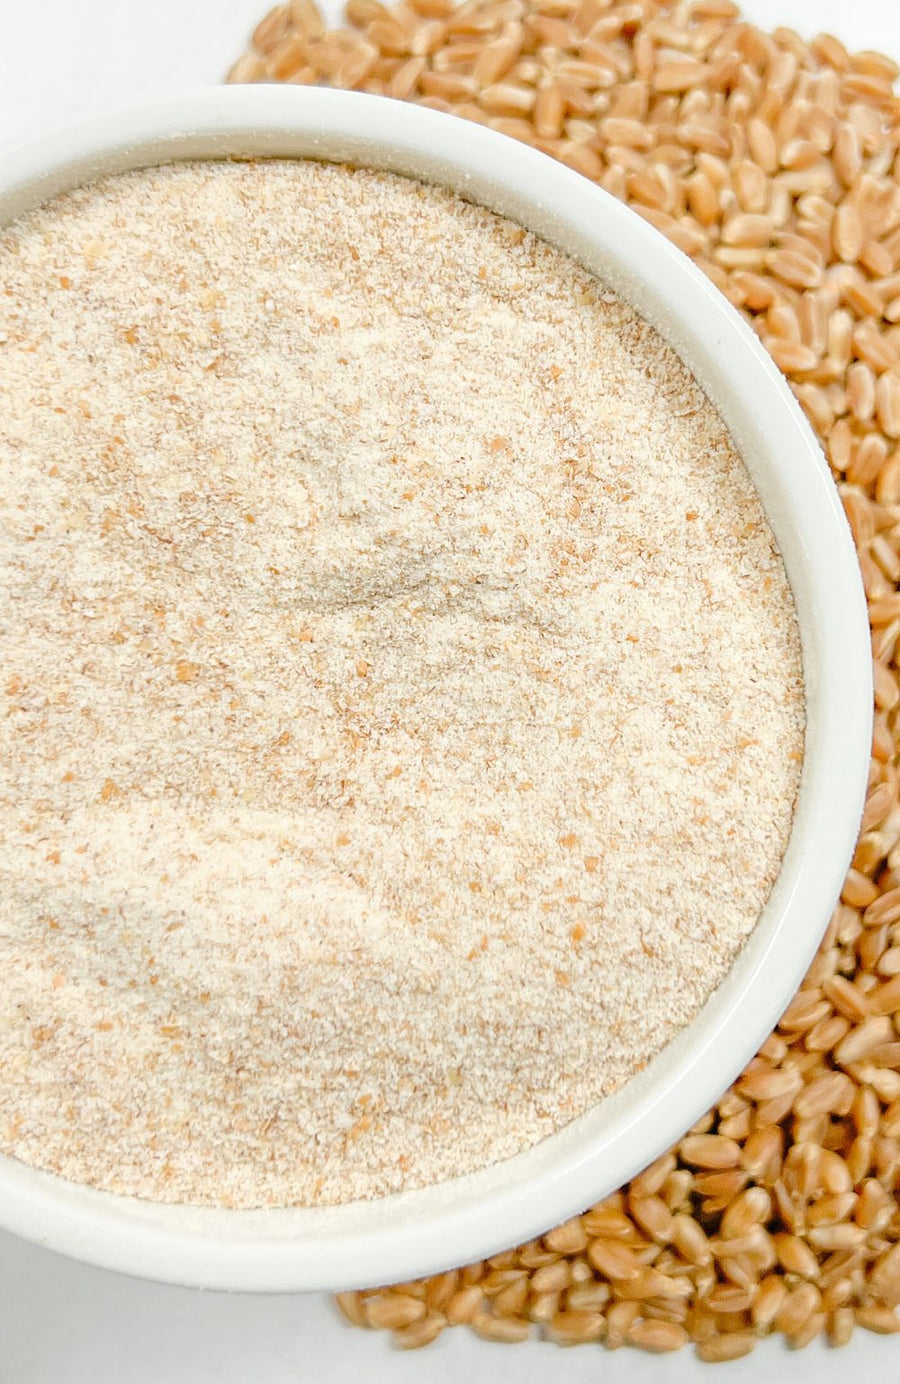 Palouse Brand Stone Ground Whole Wheat Bread Flour, 9 LBS (3 - 3 LB Bags)